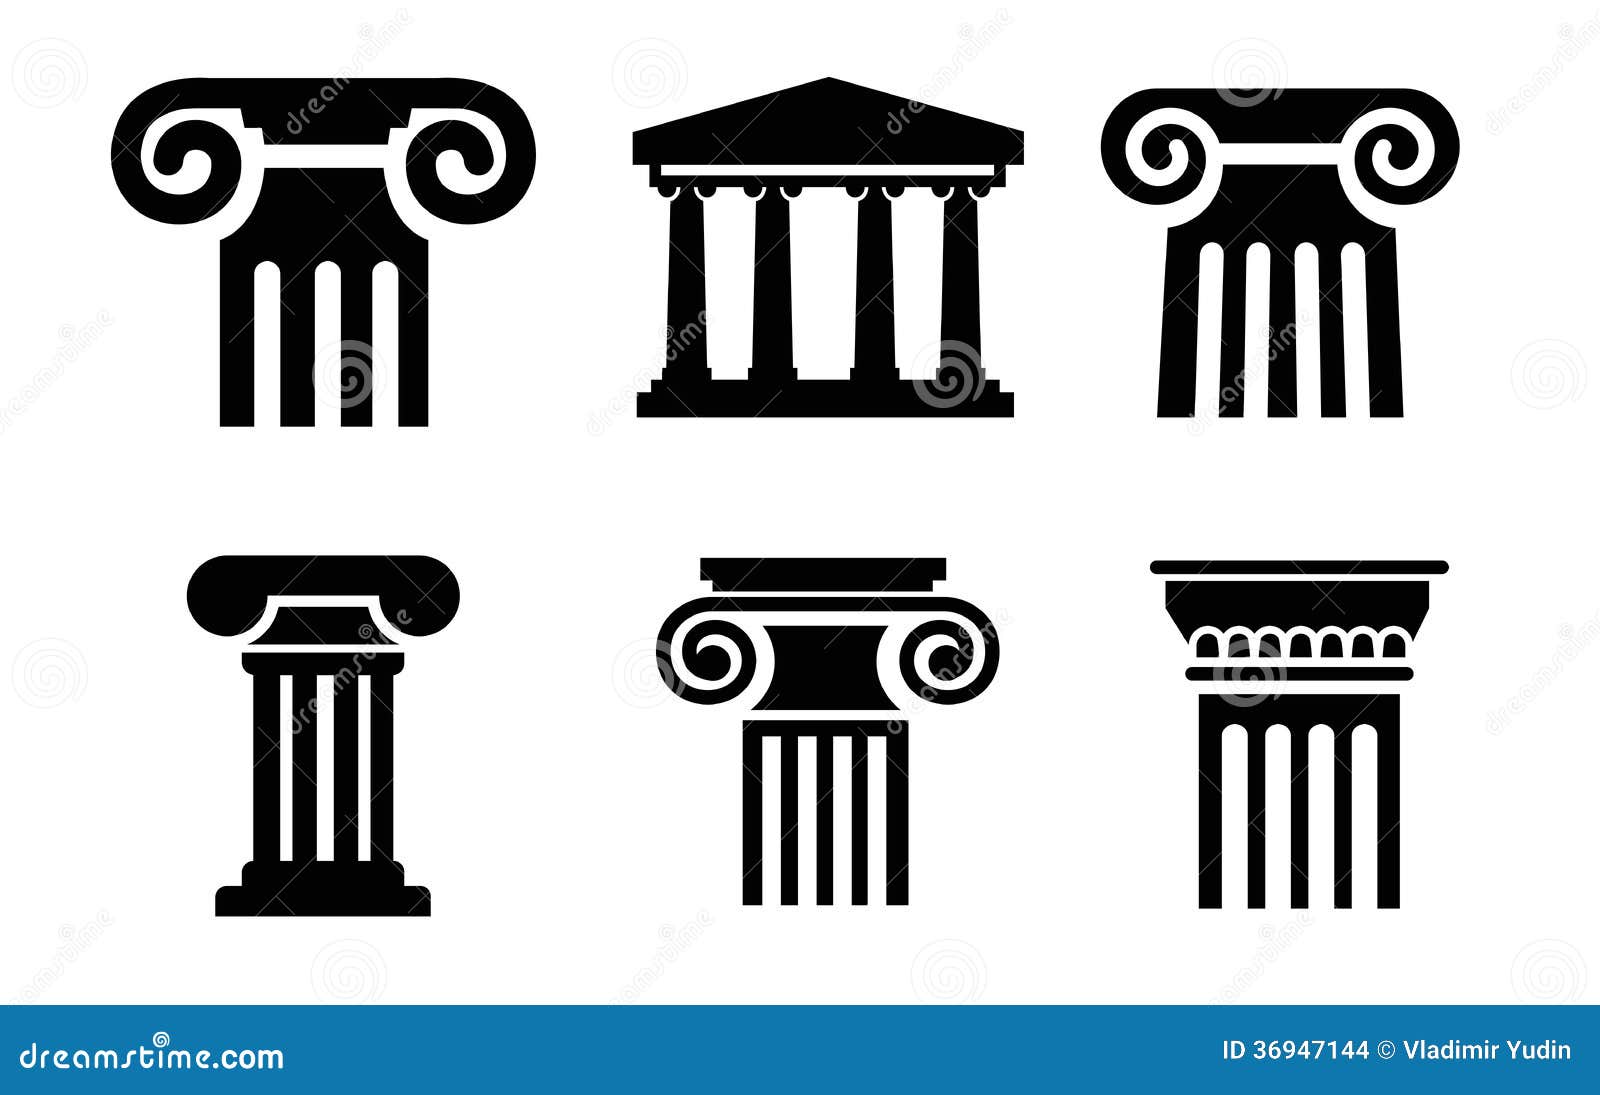 column icons